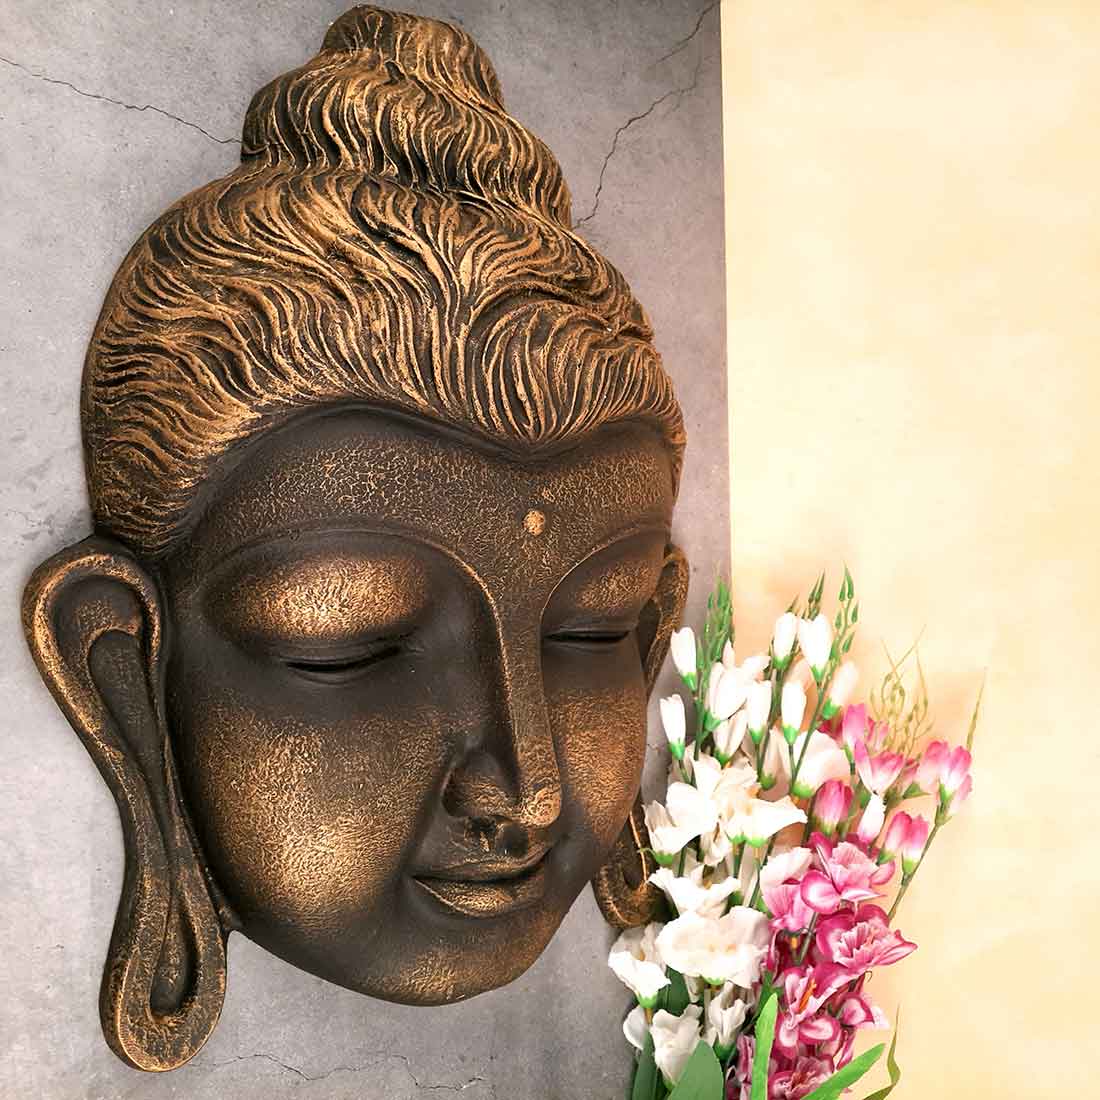 Buddha Face Wall Hanging | Big Buddha Wall decor - For Living Room, Home Decor & Gifts - 27 Inch